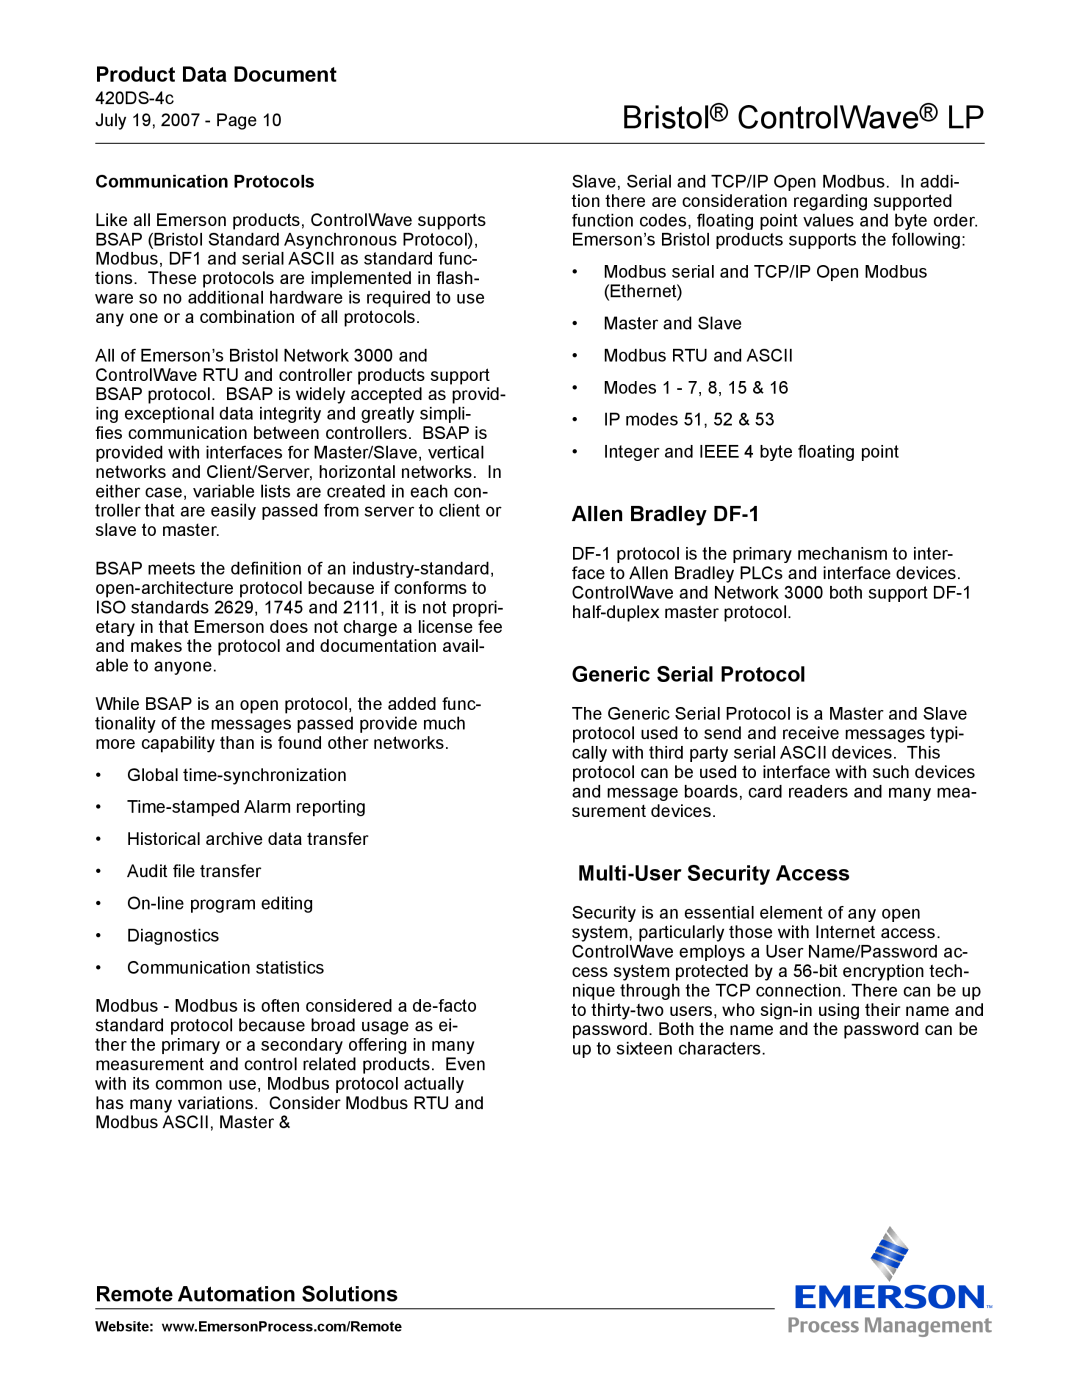 Emerson Process Management ControlWave LP manual Allen Bradley DF-1, Generic Serial Protocol, Multi-User Security Access 